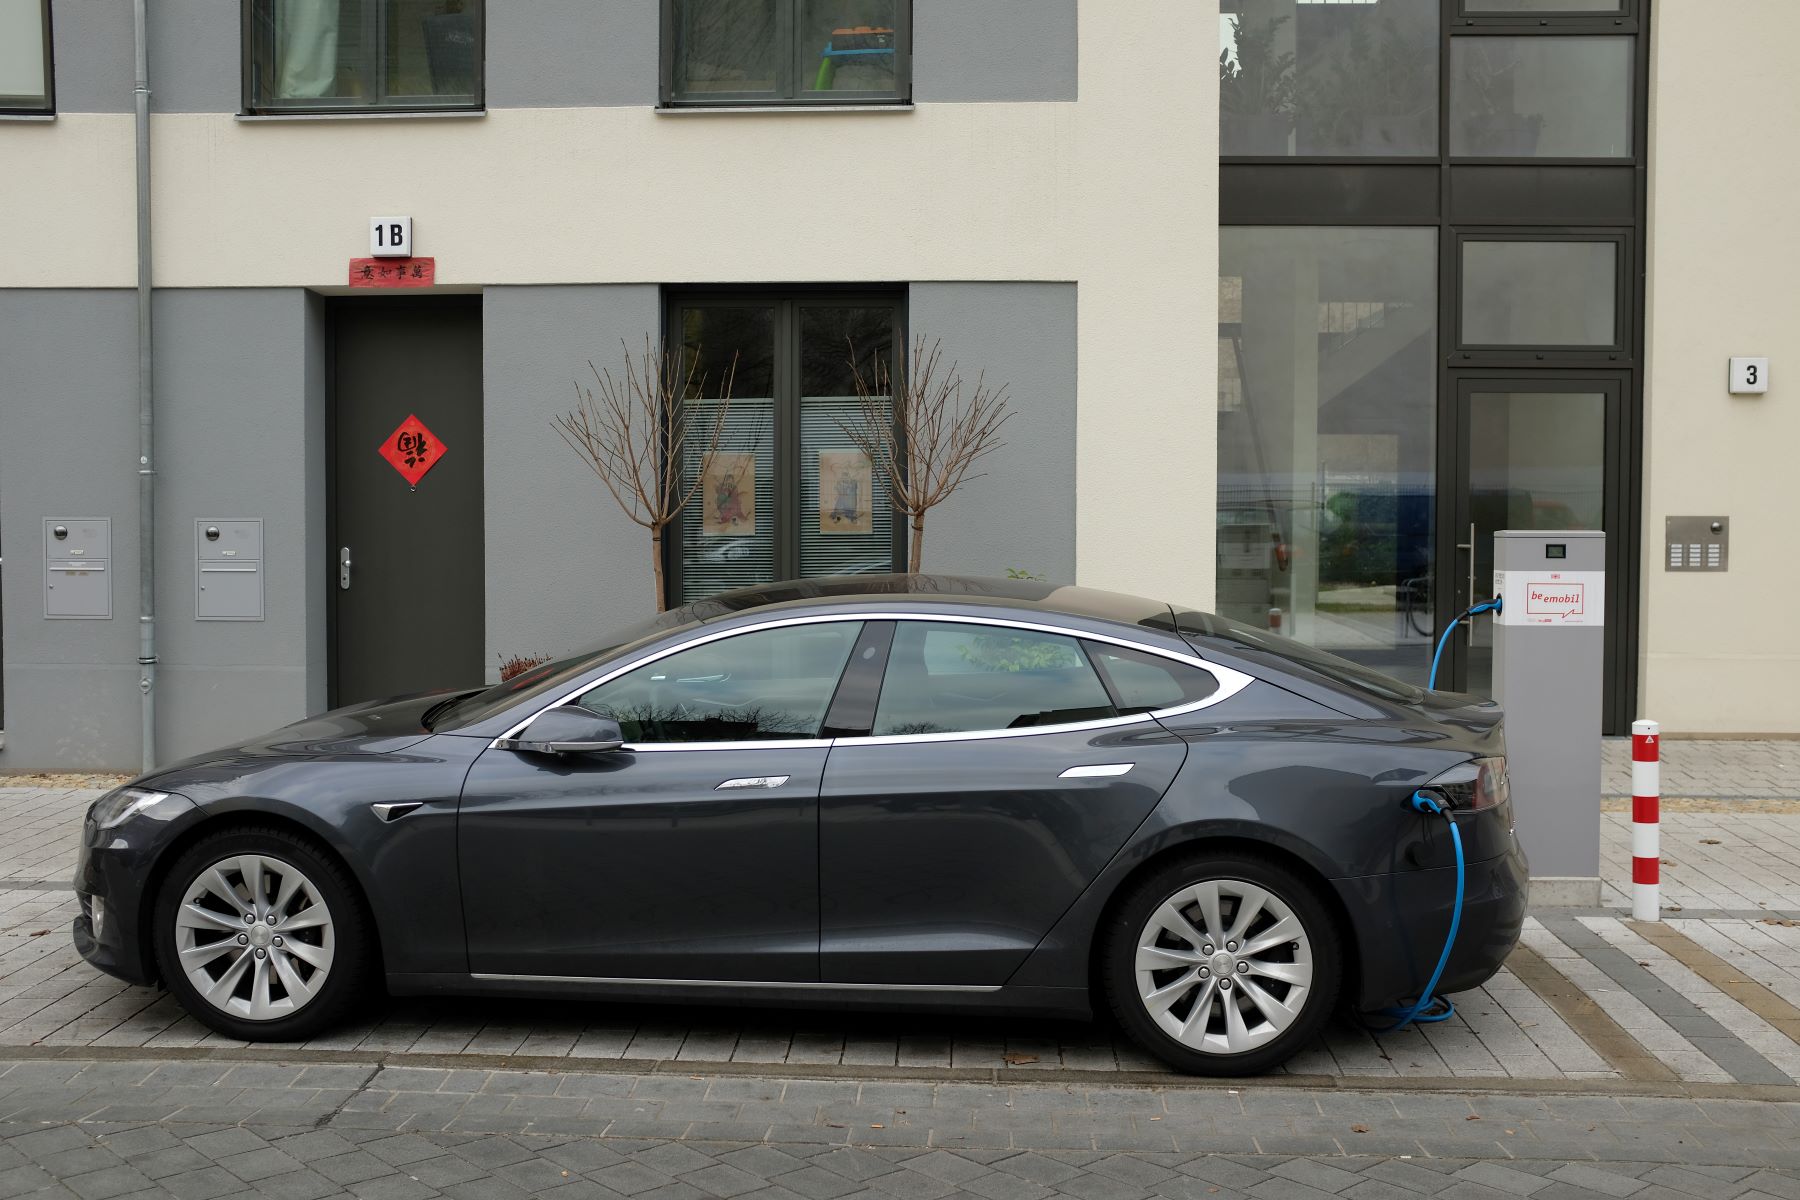 A Tesla Model S electric (EV) luxury full-size sedan charging at a public station in Berlin, Germany